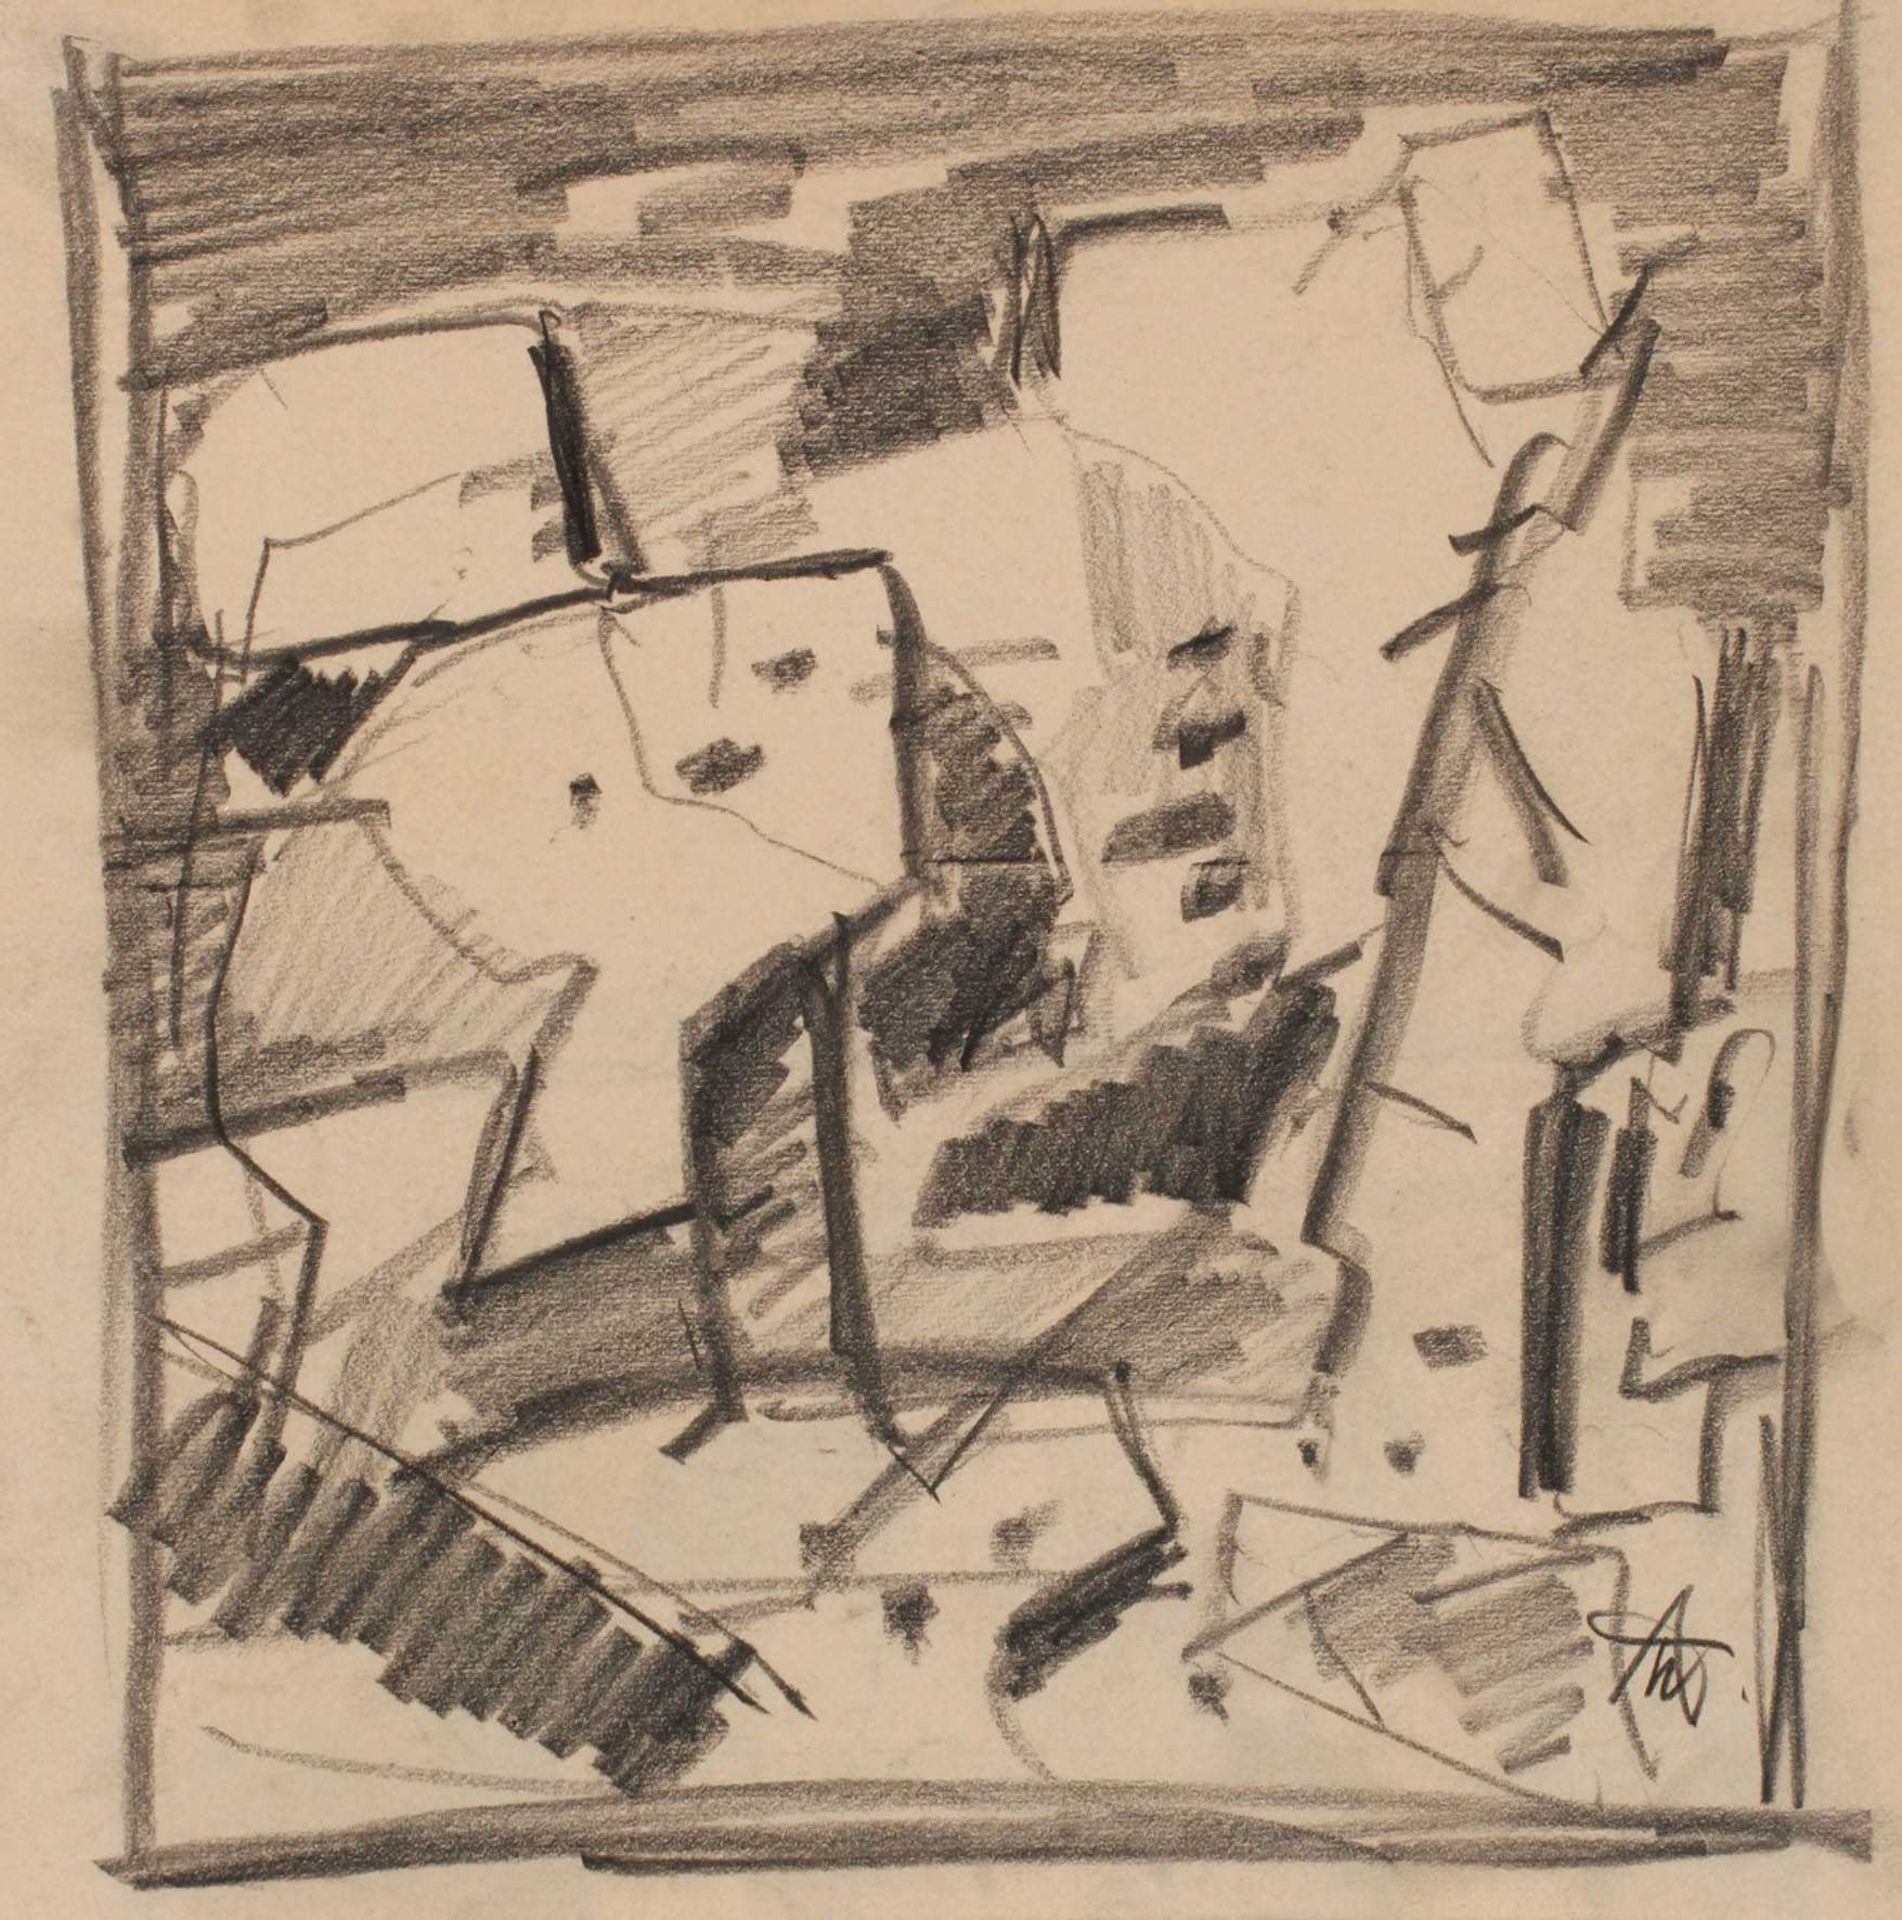 Alexander Wolfgang, Abstrakte Felslandschaft Bleistiftzeichnung, um 1950, rechts unten in Blei